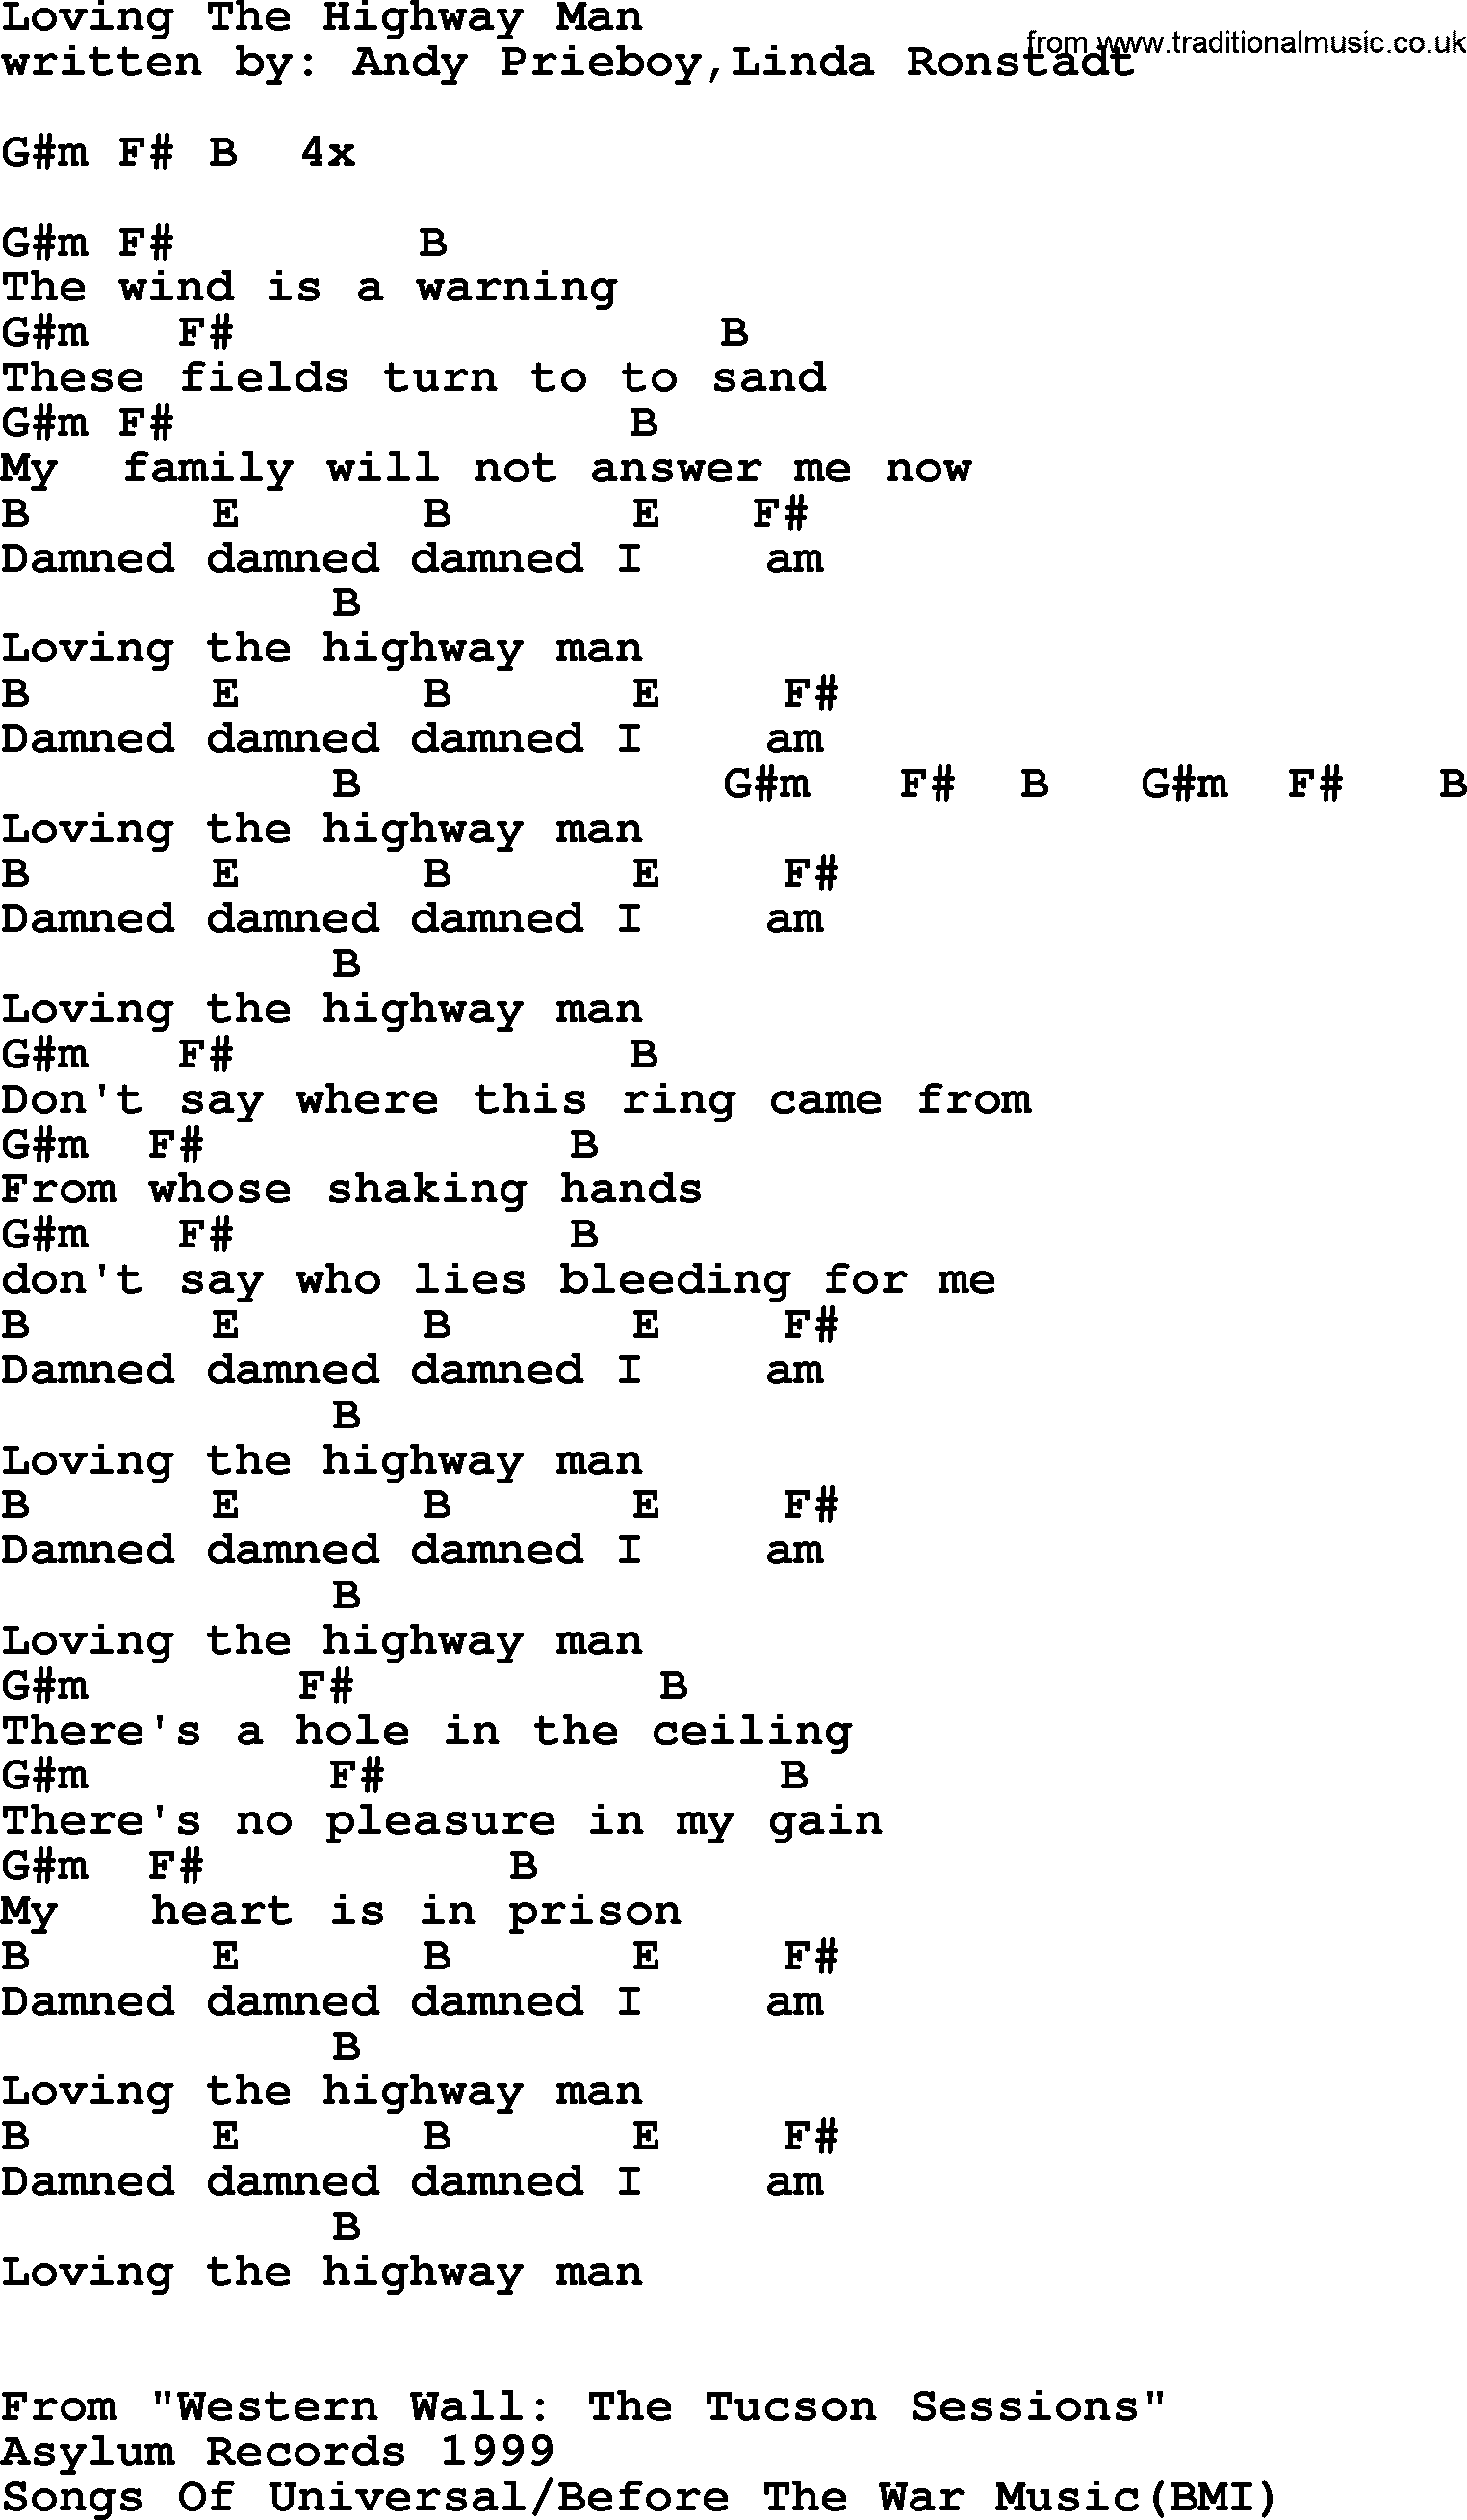 Emmylou Harris song: Loving The Highway Man lyrics and chords